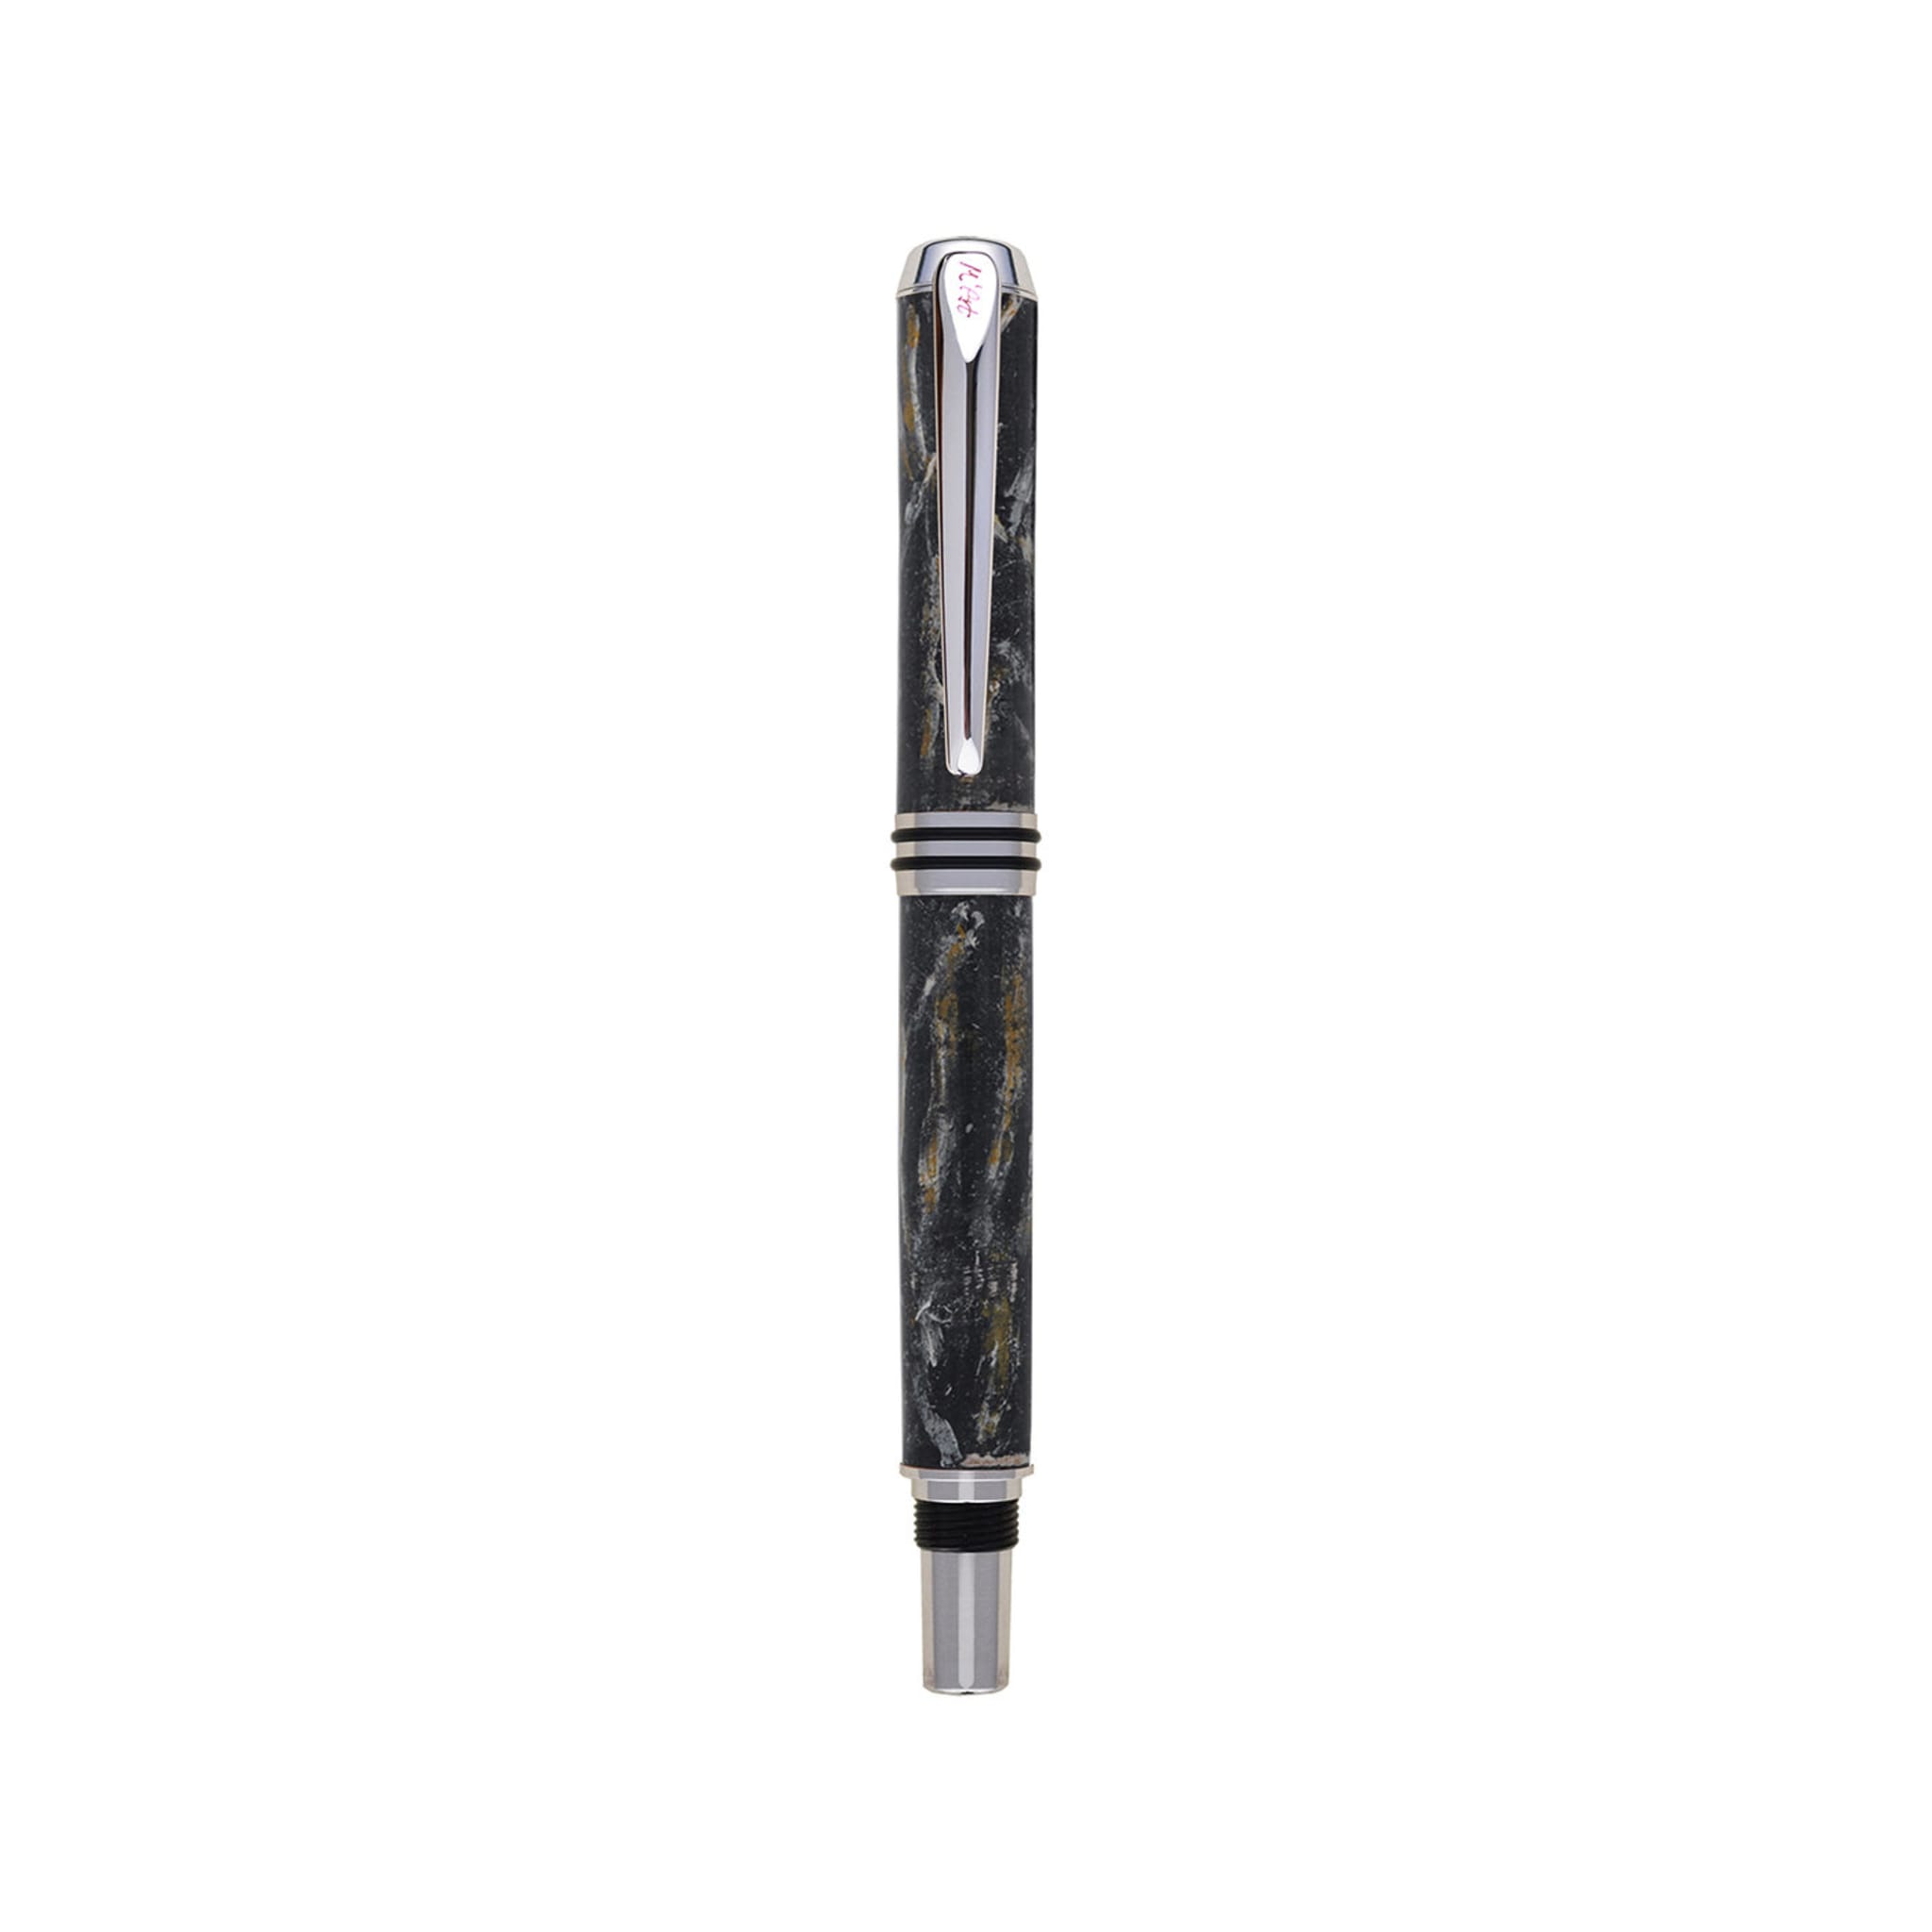 Antea Marbled Black Roller Pen in Olive Wood - Alternative view 1